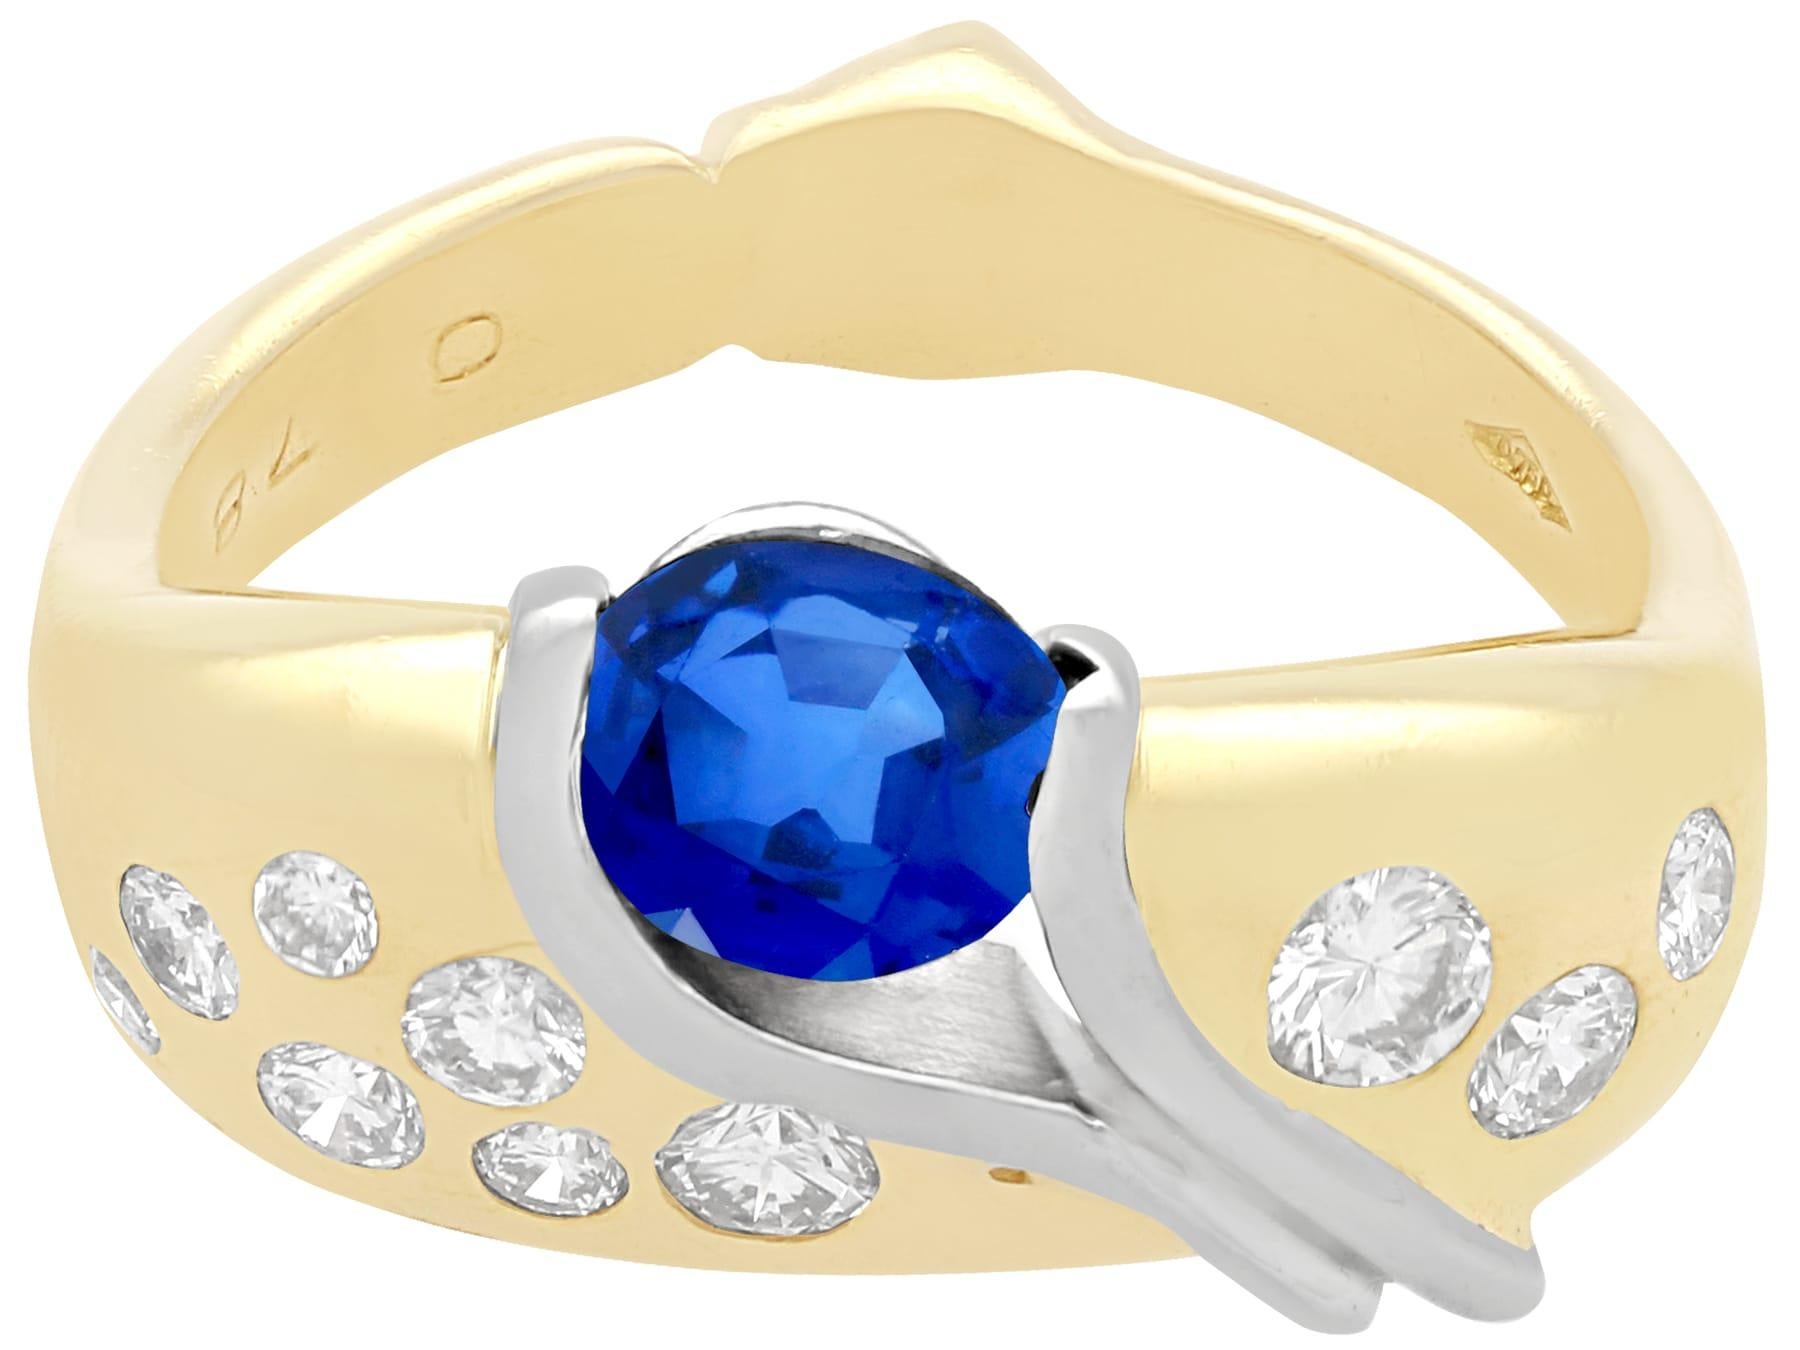 1980s sapphire and diamond ring